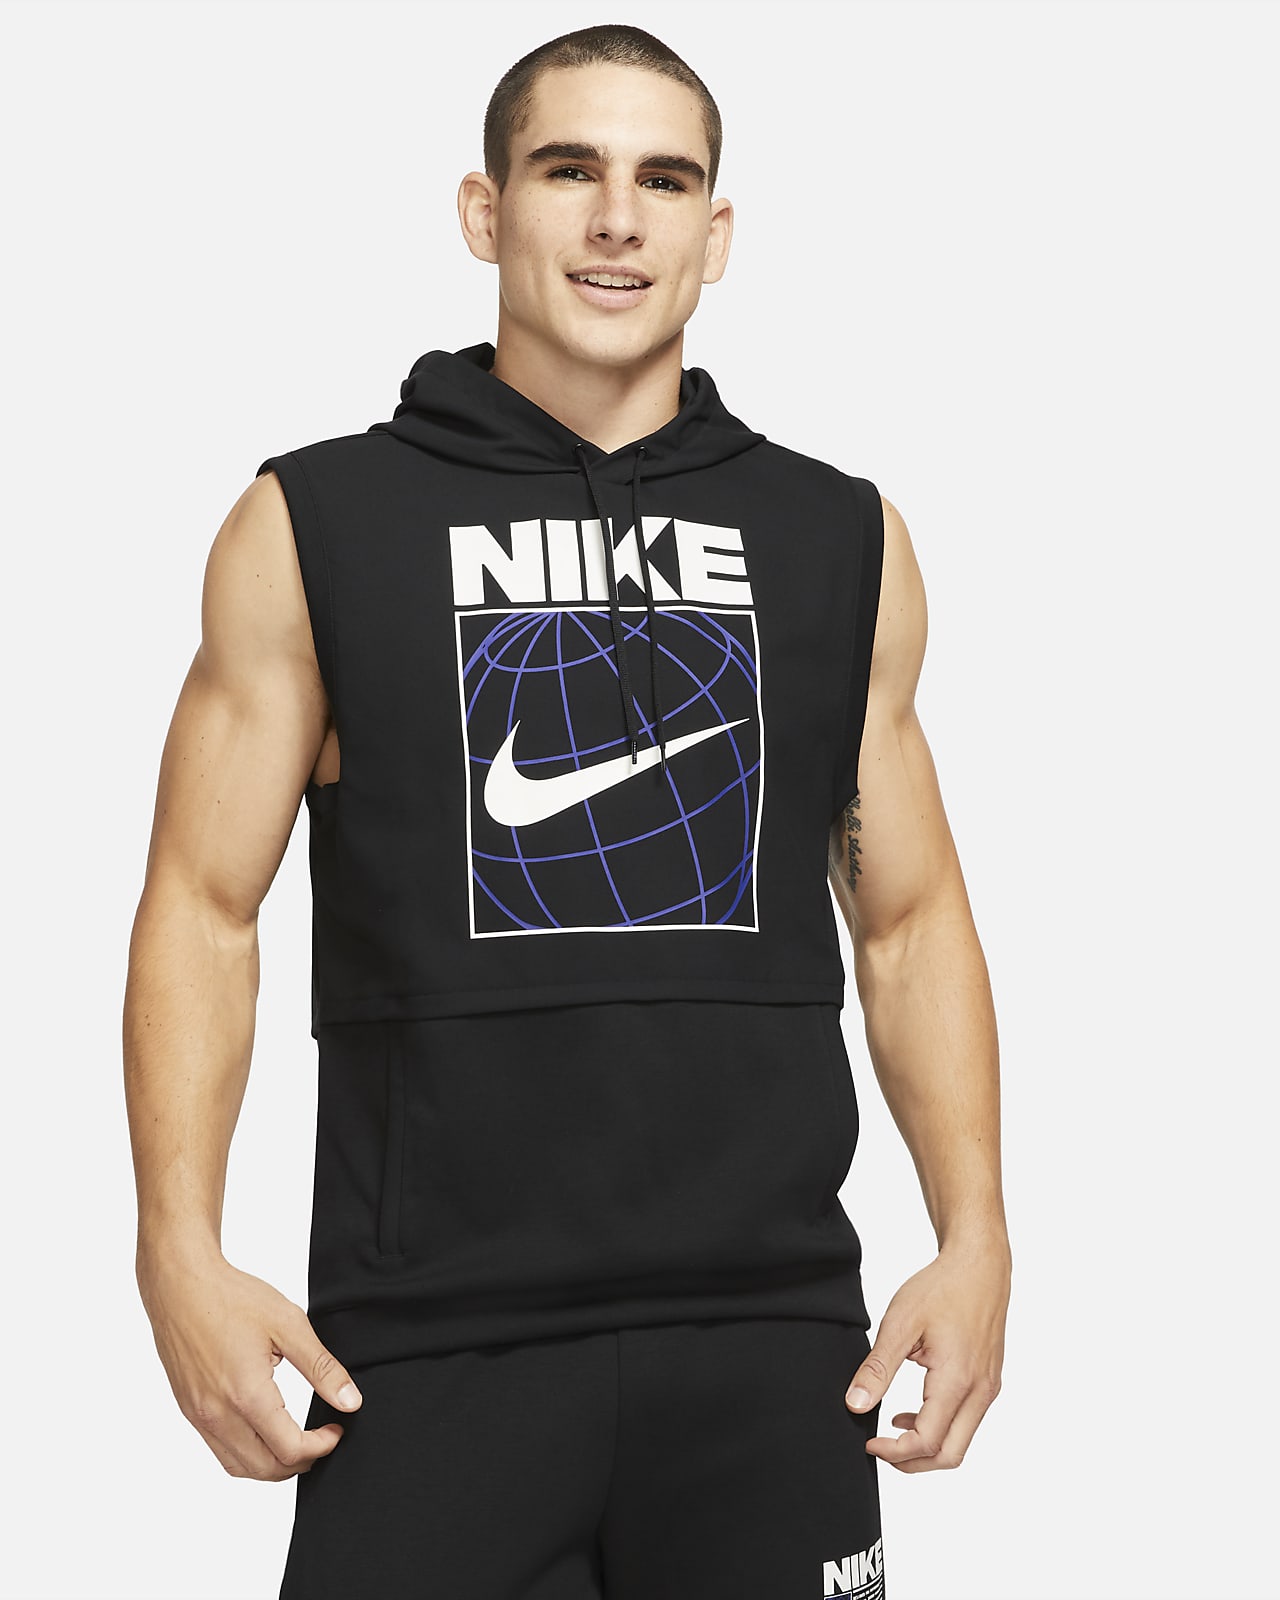 Nike Dri Fit Men S Sleeveless Graphic Training Hoodie Nike Jp